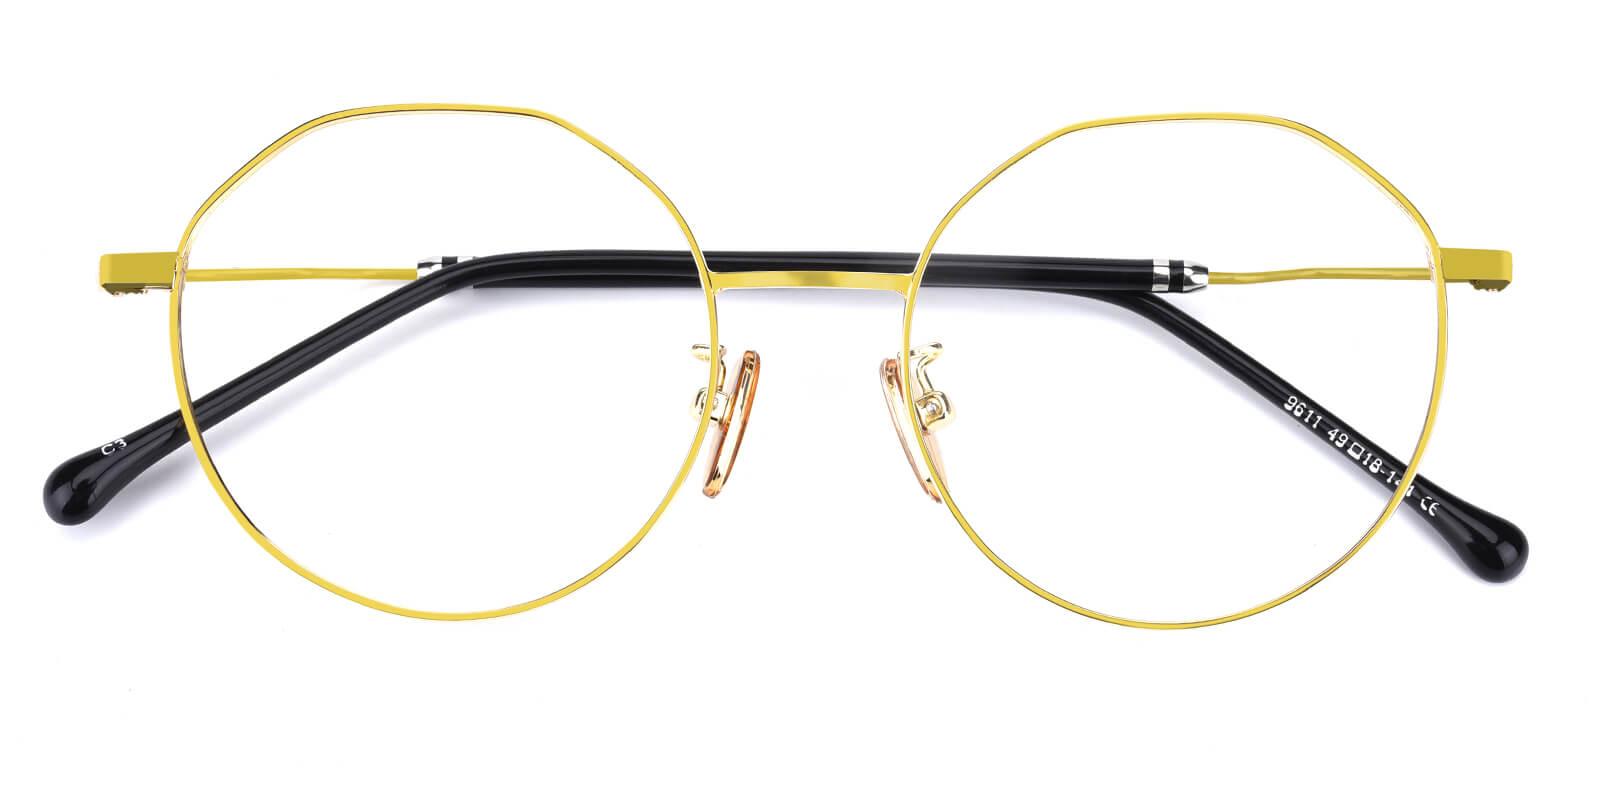 Clarker-Gold-Geometric / Round-Metal-Eyeglasses-detail